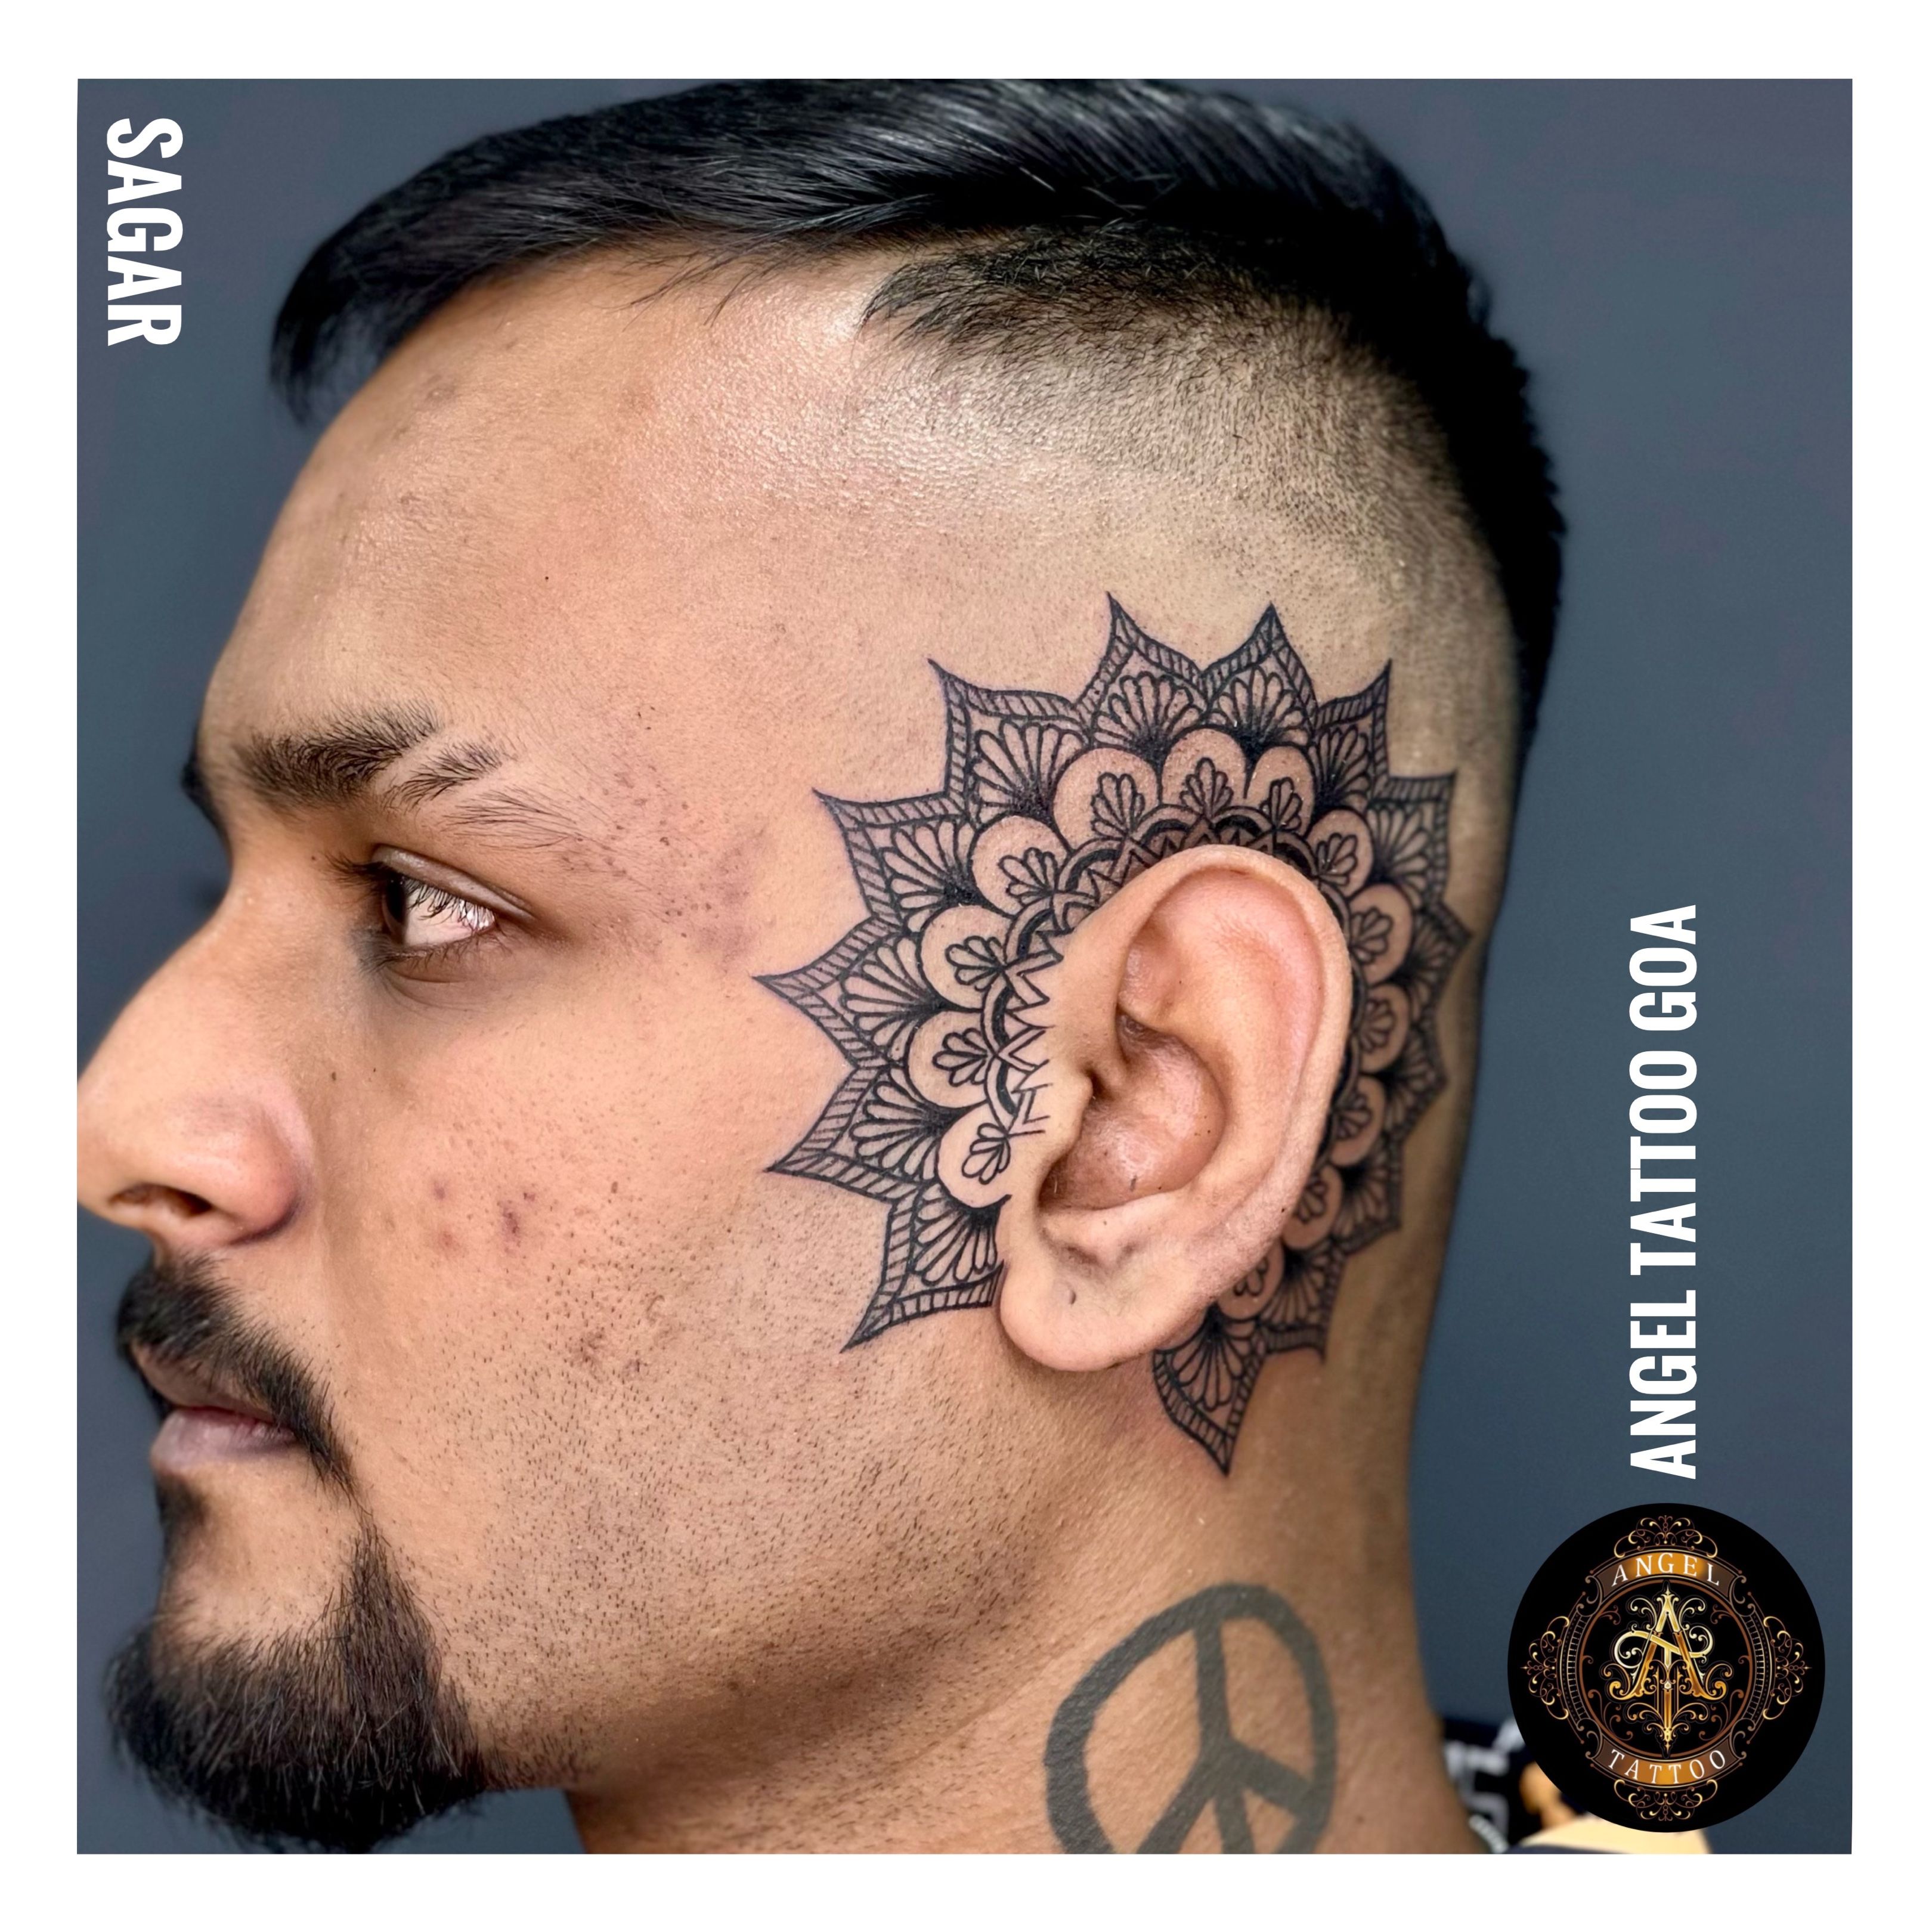 Skin Hug Tatto Studio in Anjuna,Goa - Best Tattoo Parlours in Goa - Justdial